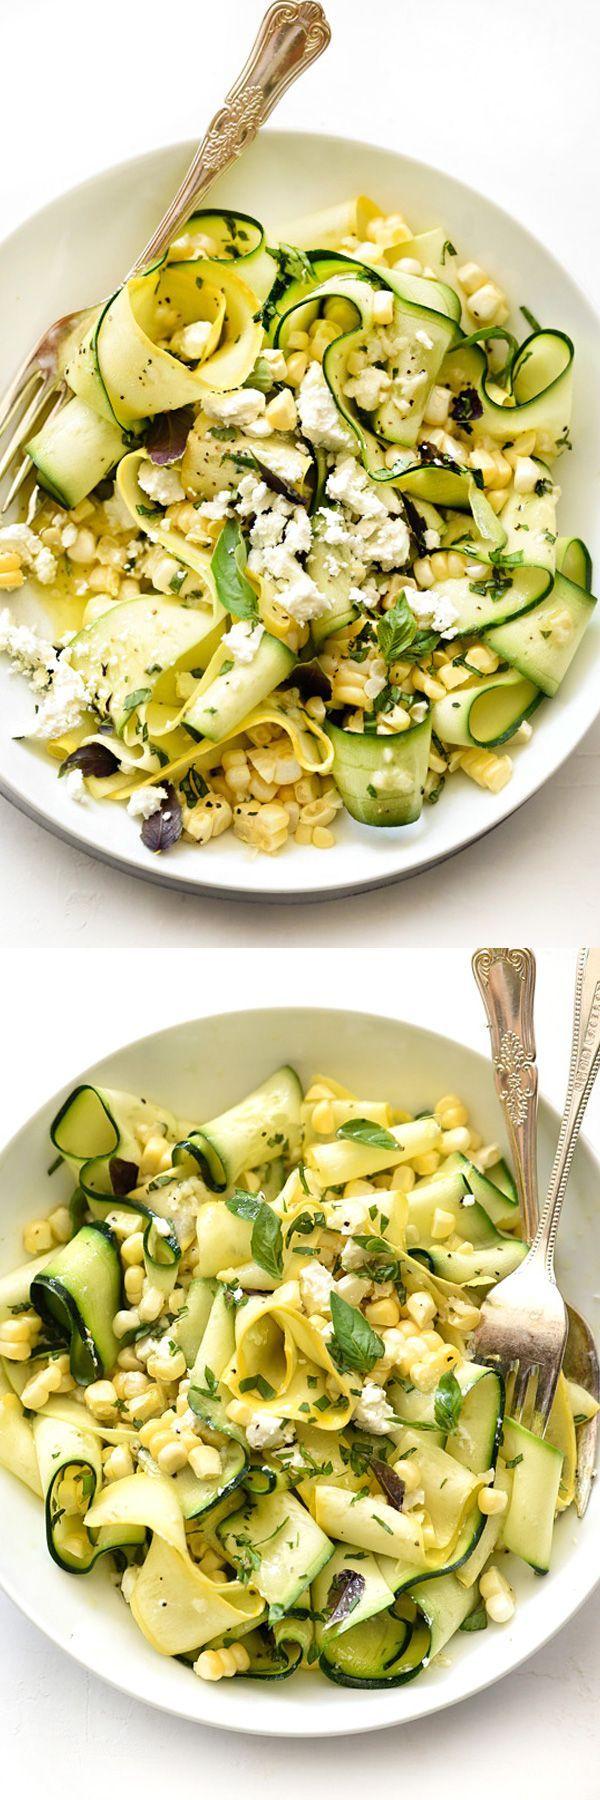 Wedding - Zucchini And Fresh Corn Farmers' Market Salad With Lemon-Basil Vinaigrette